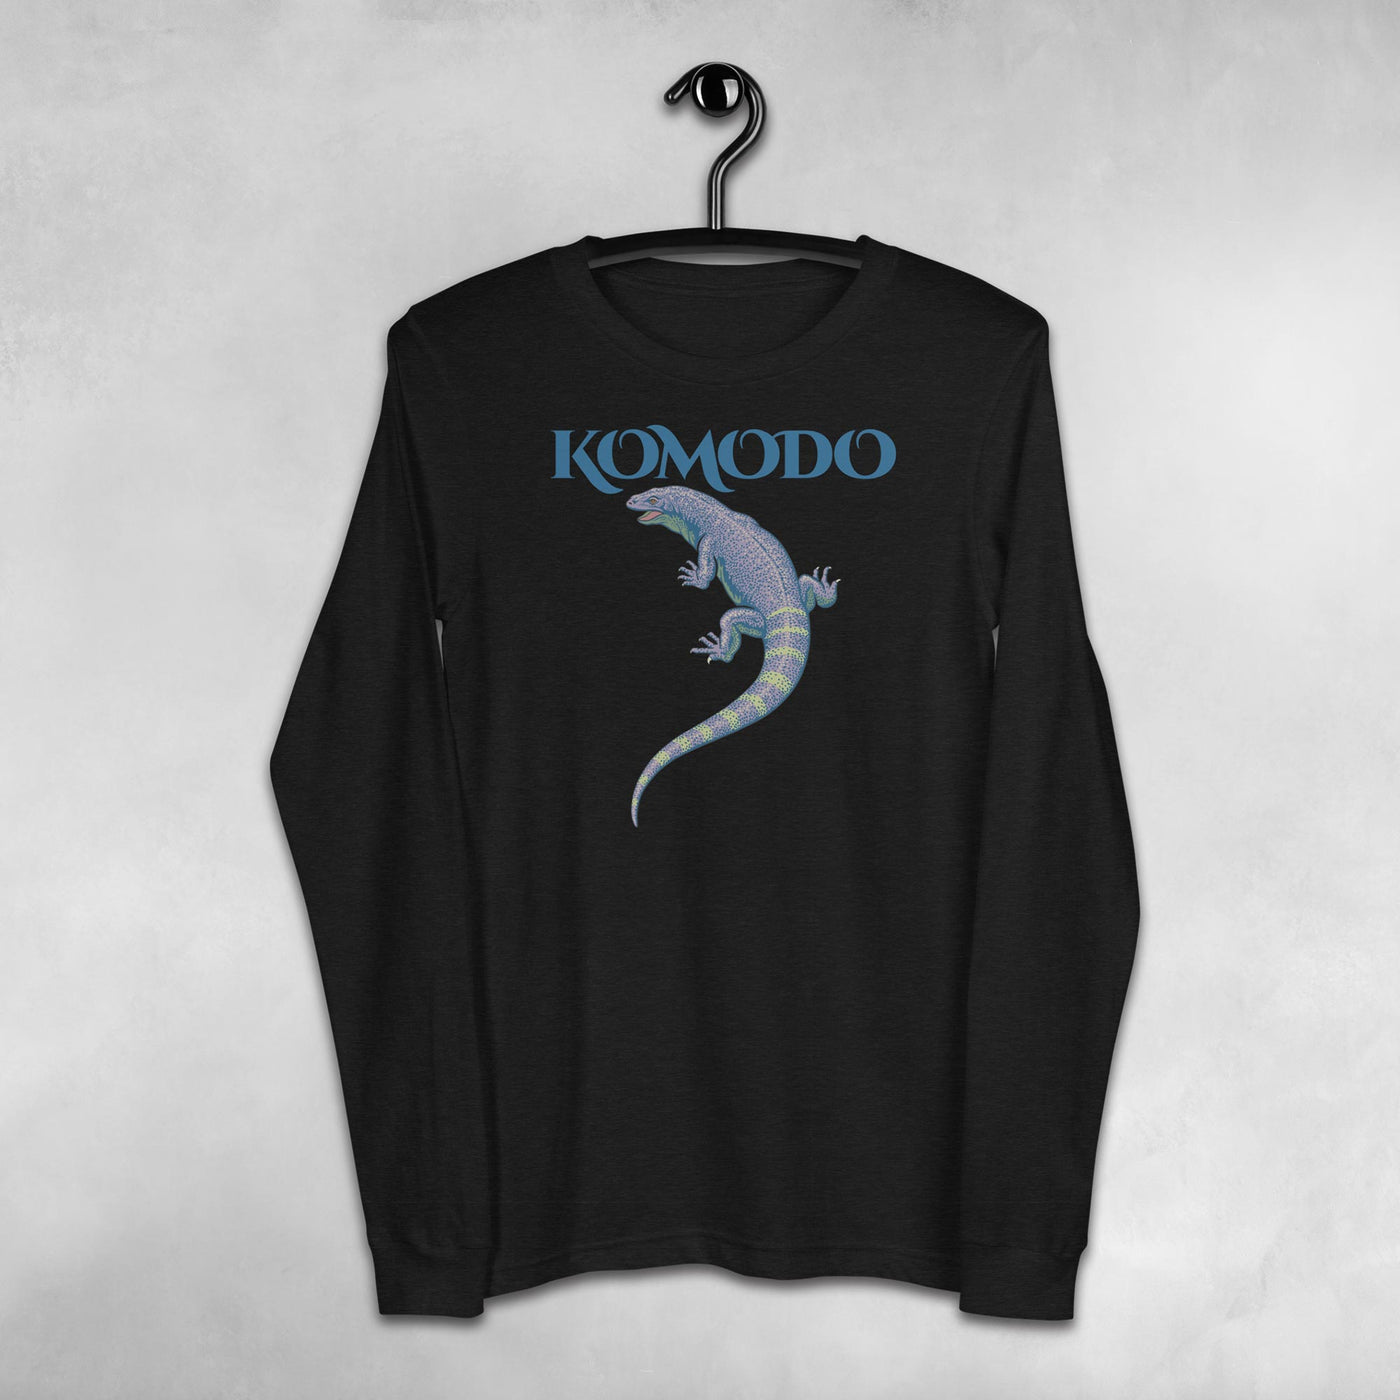 Komodo - Long Sleeve T-Shirt